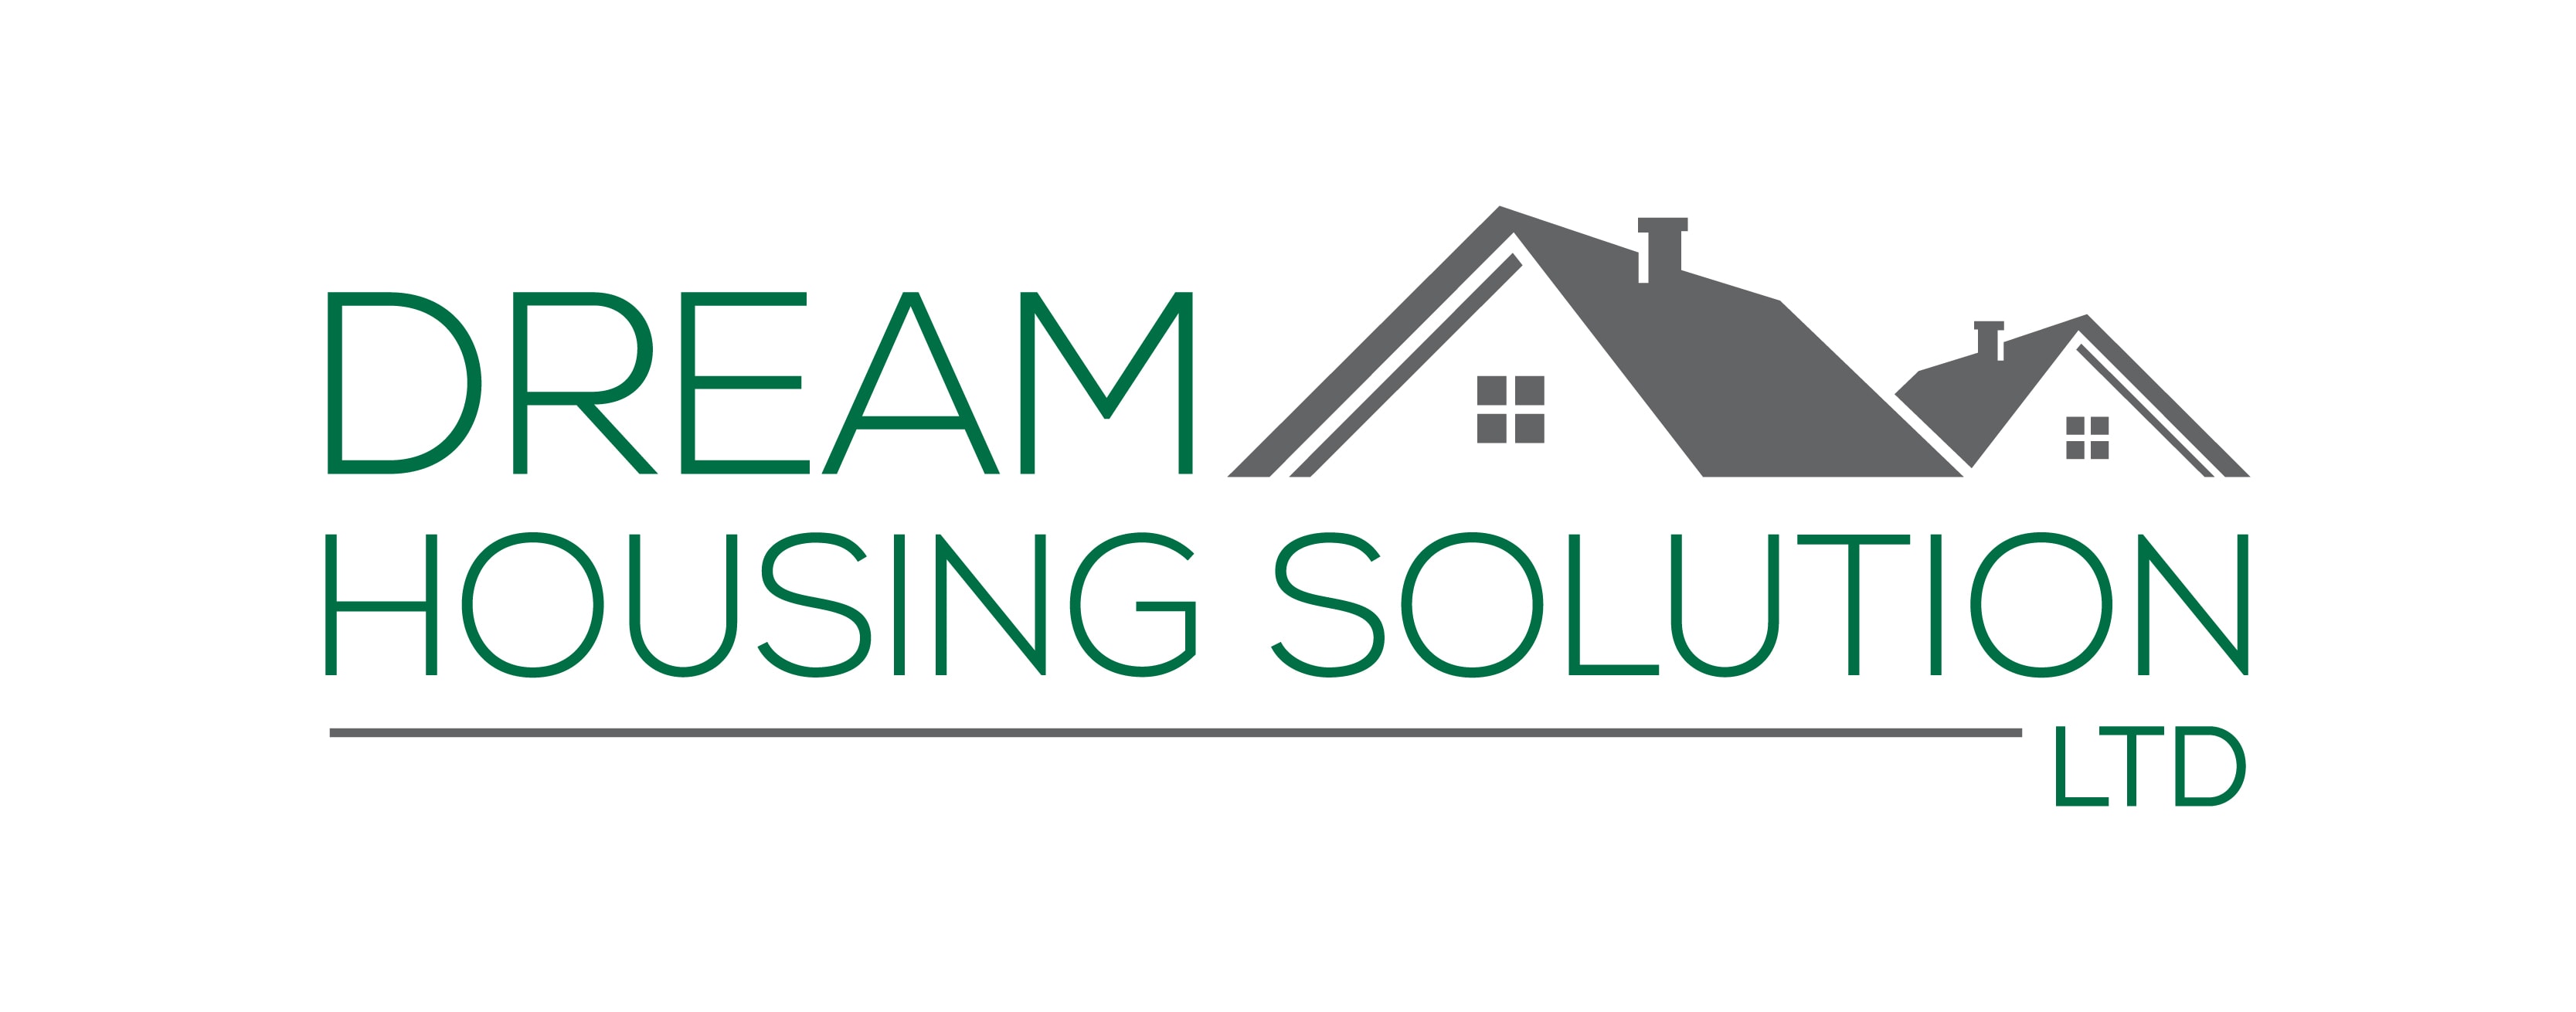 Dream Housing Solution